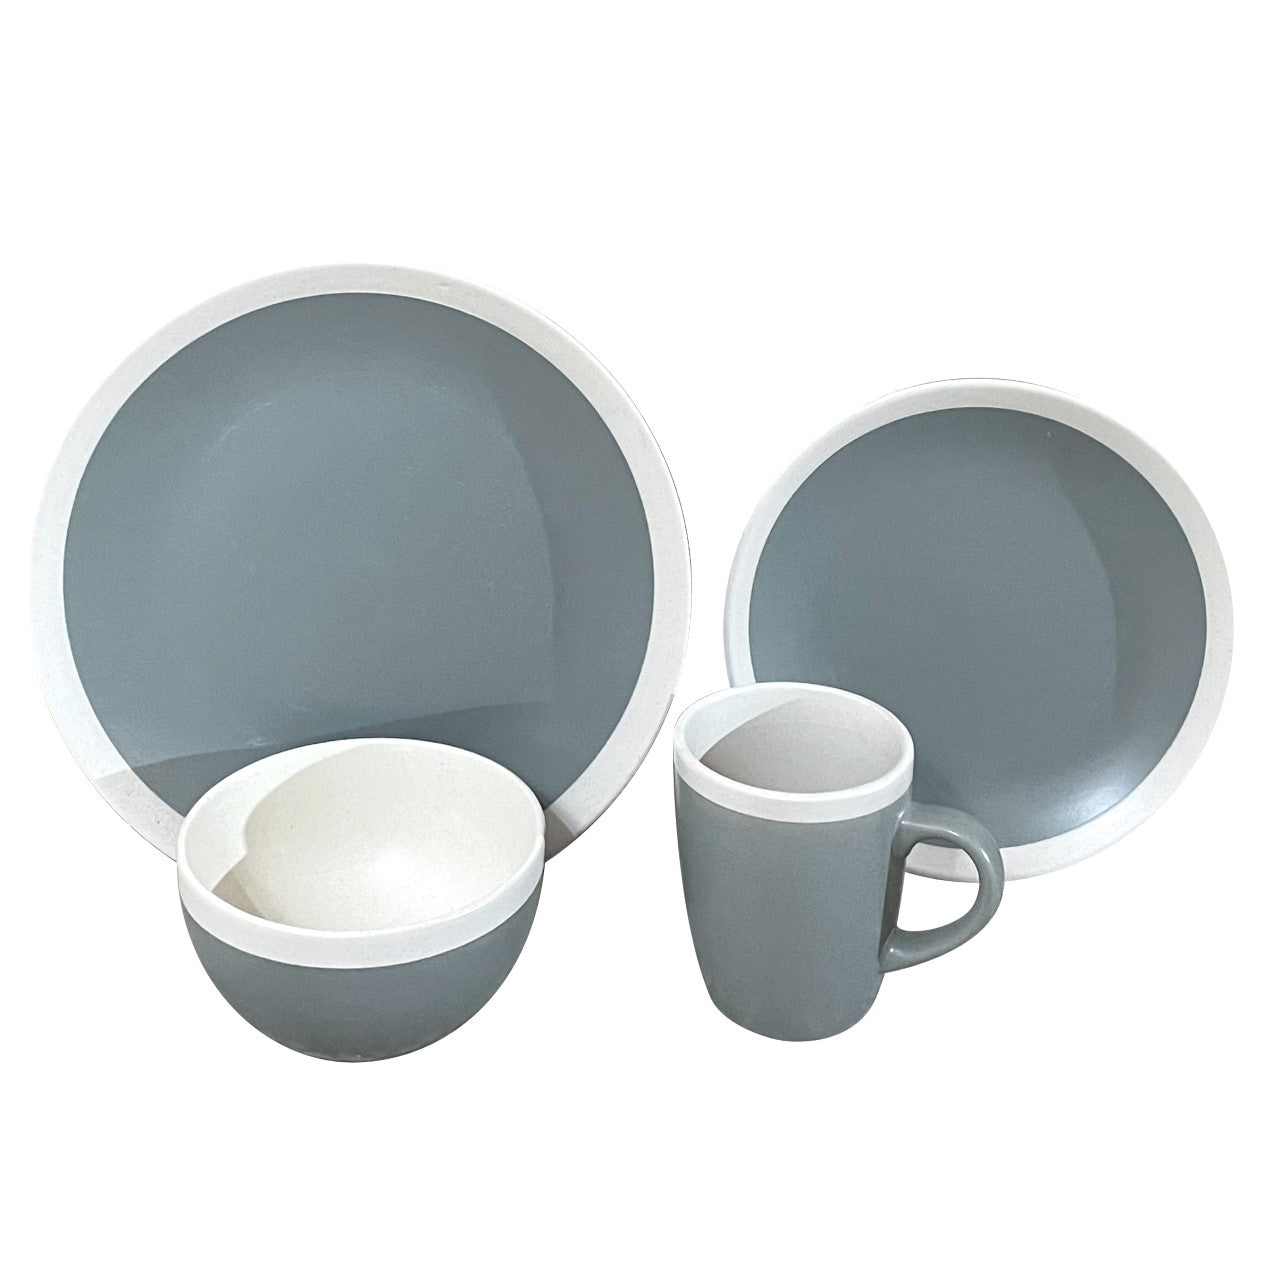 Durane Dinner Set 16pc Plates Bowls Mugs Grey 10213 (Parcel Plus  Rate)